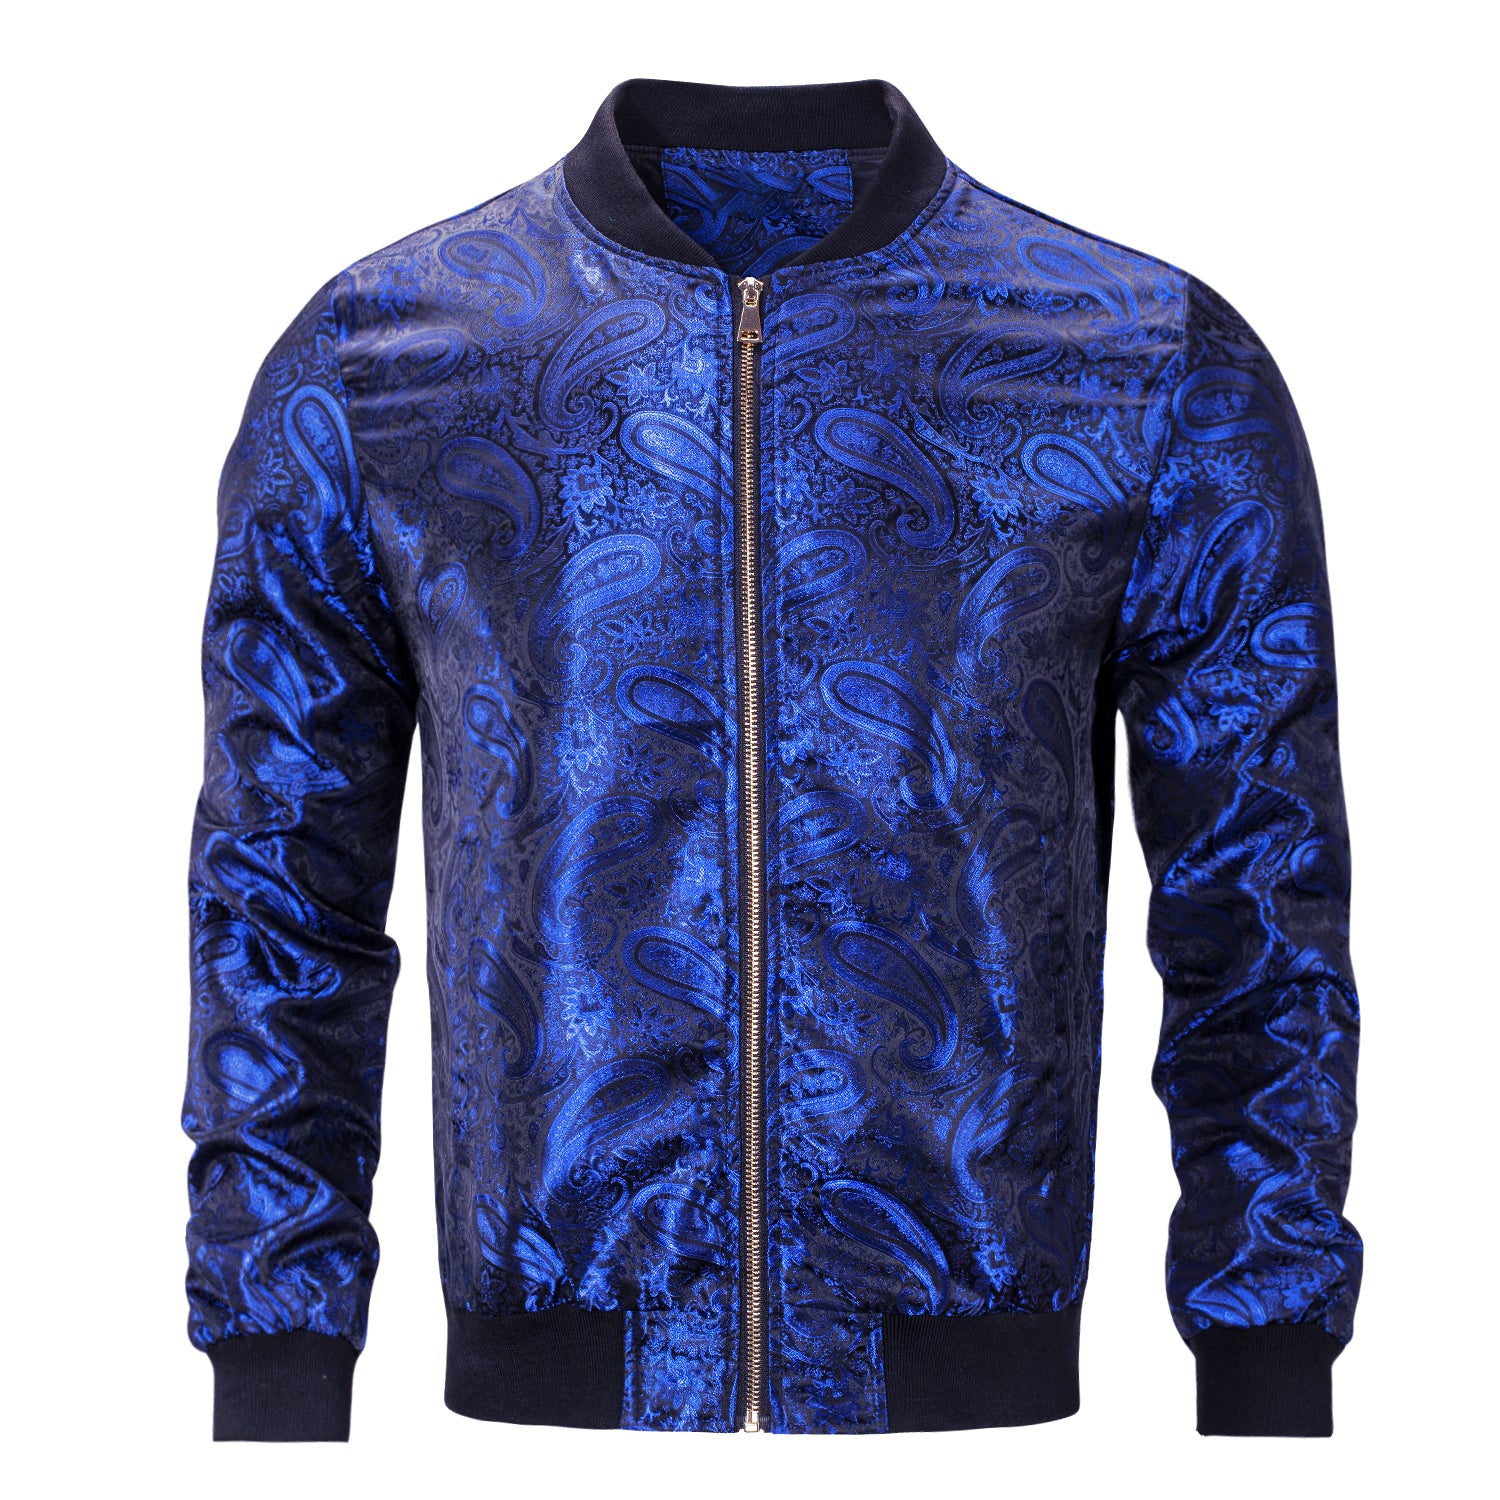 Royal Blue Paisley Men's Urban Lightweight Zip Jacket Casual